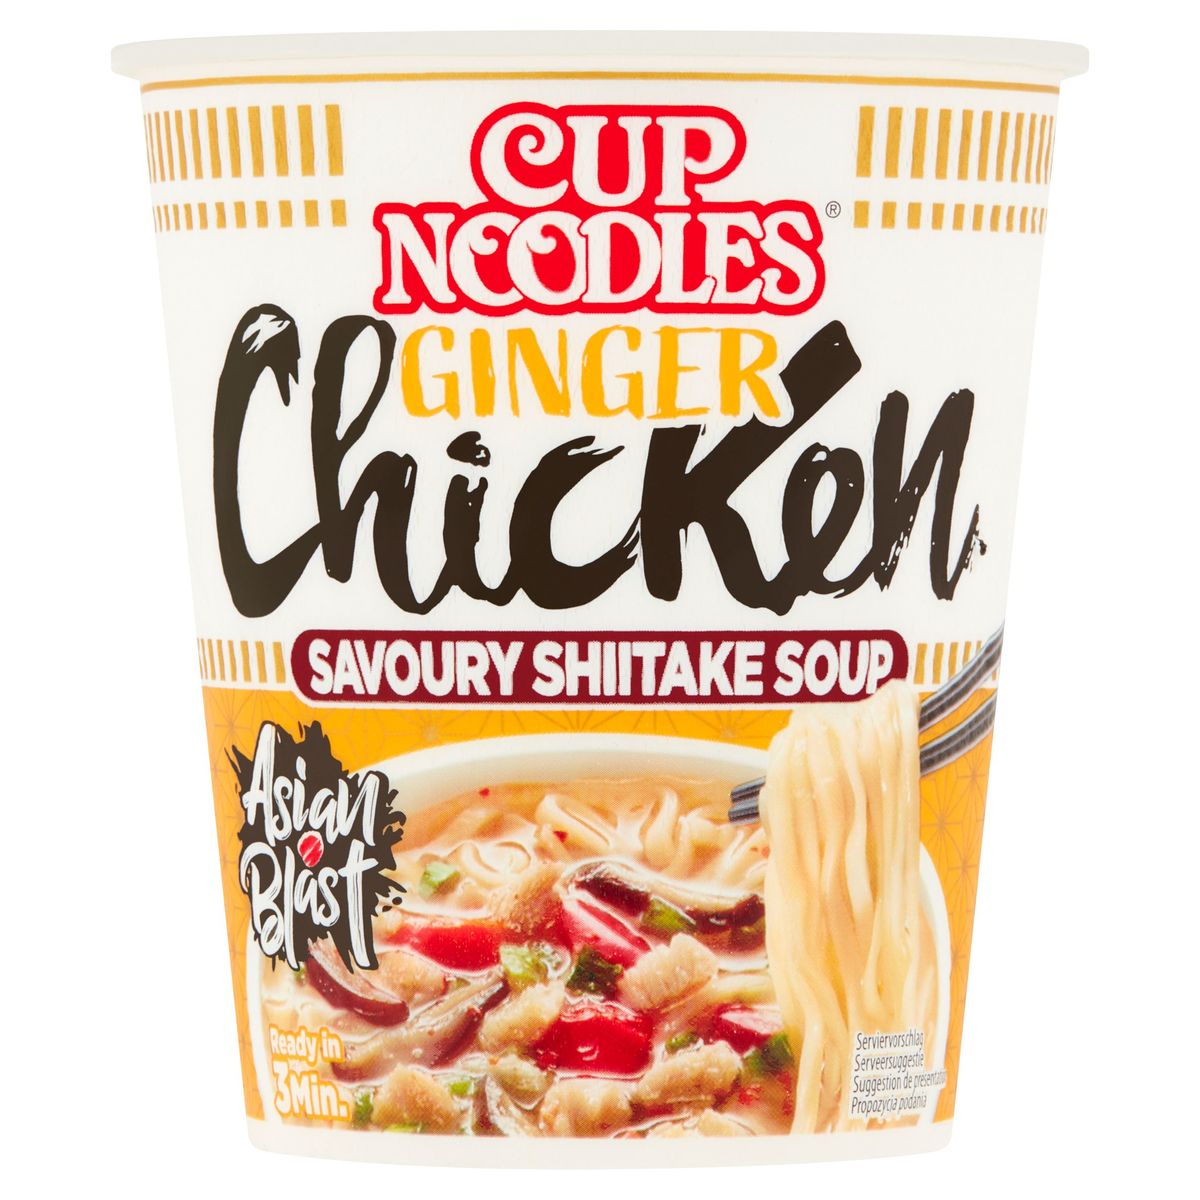 Nissin Cup Noodles Ginger Chicken 63 g